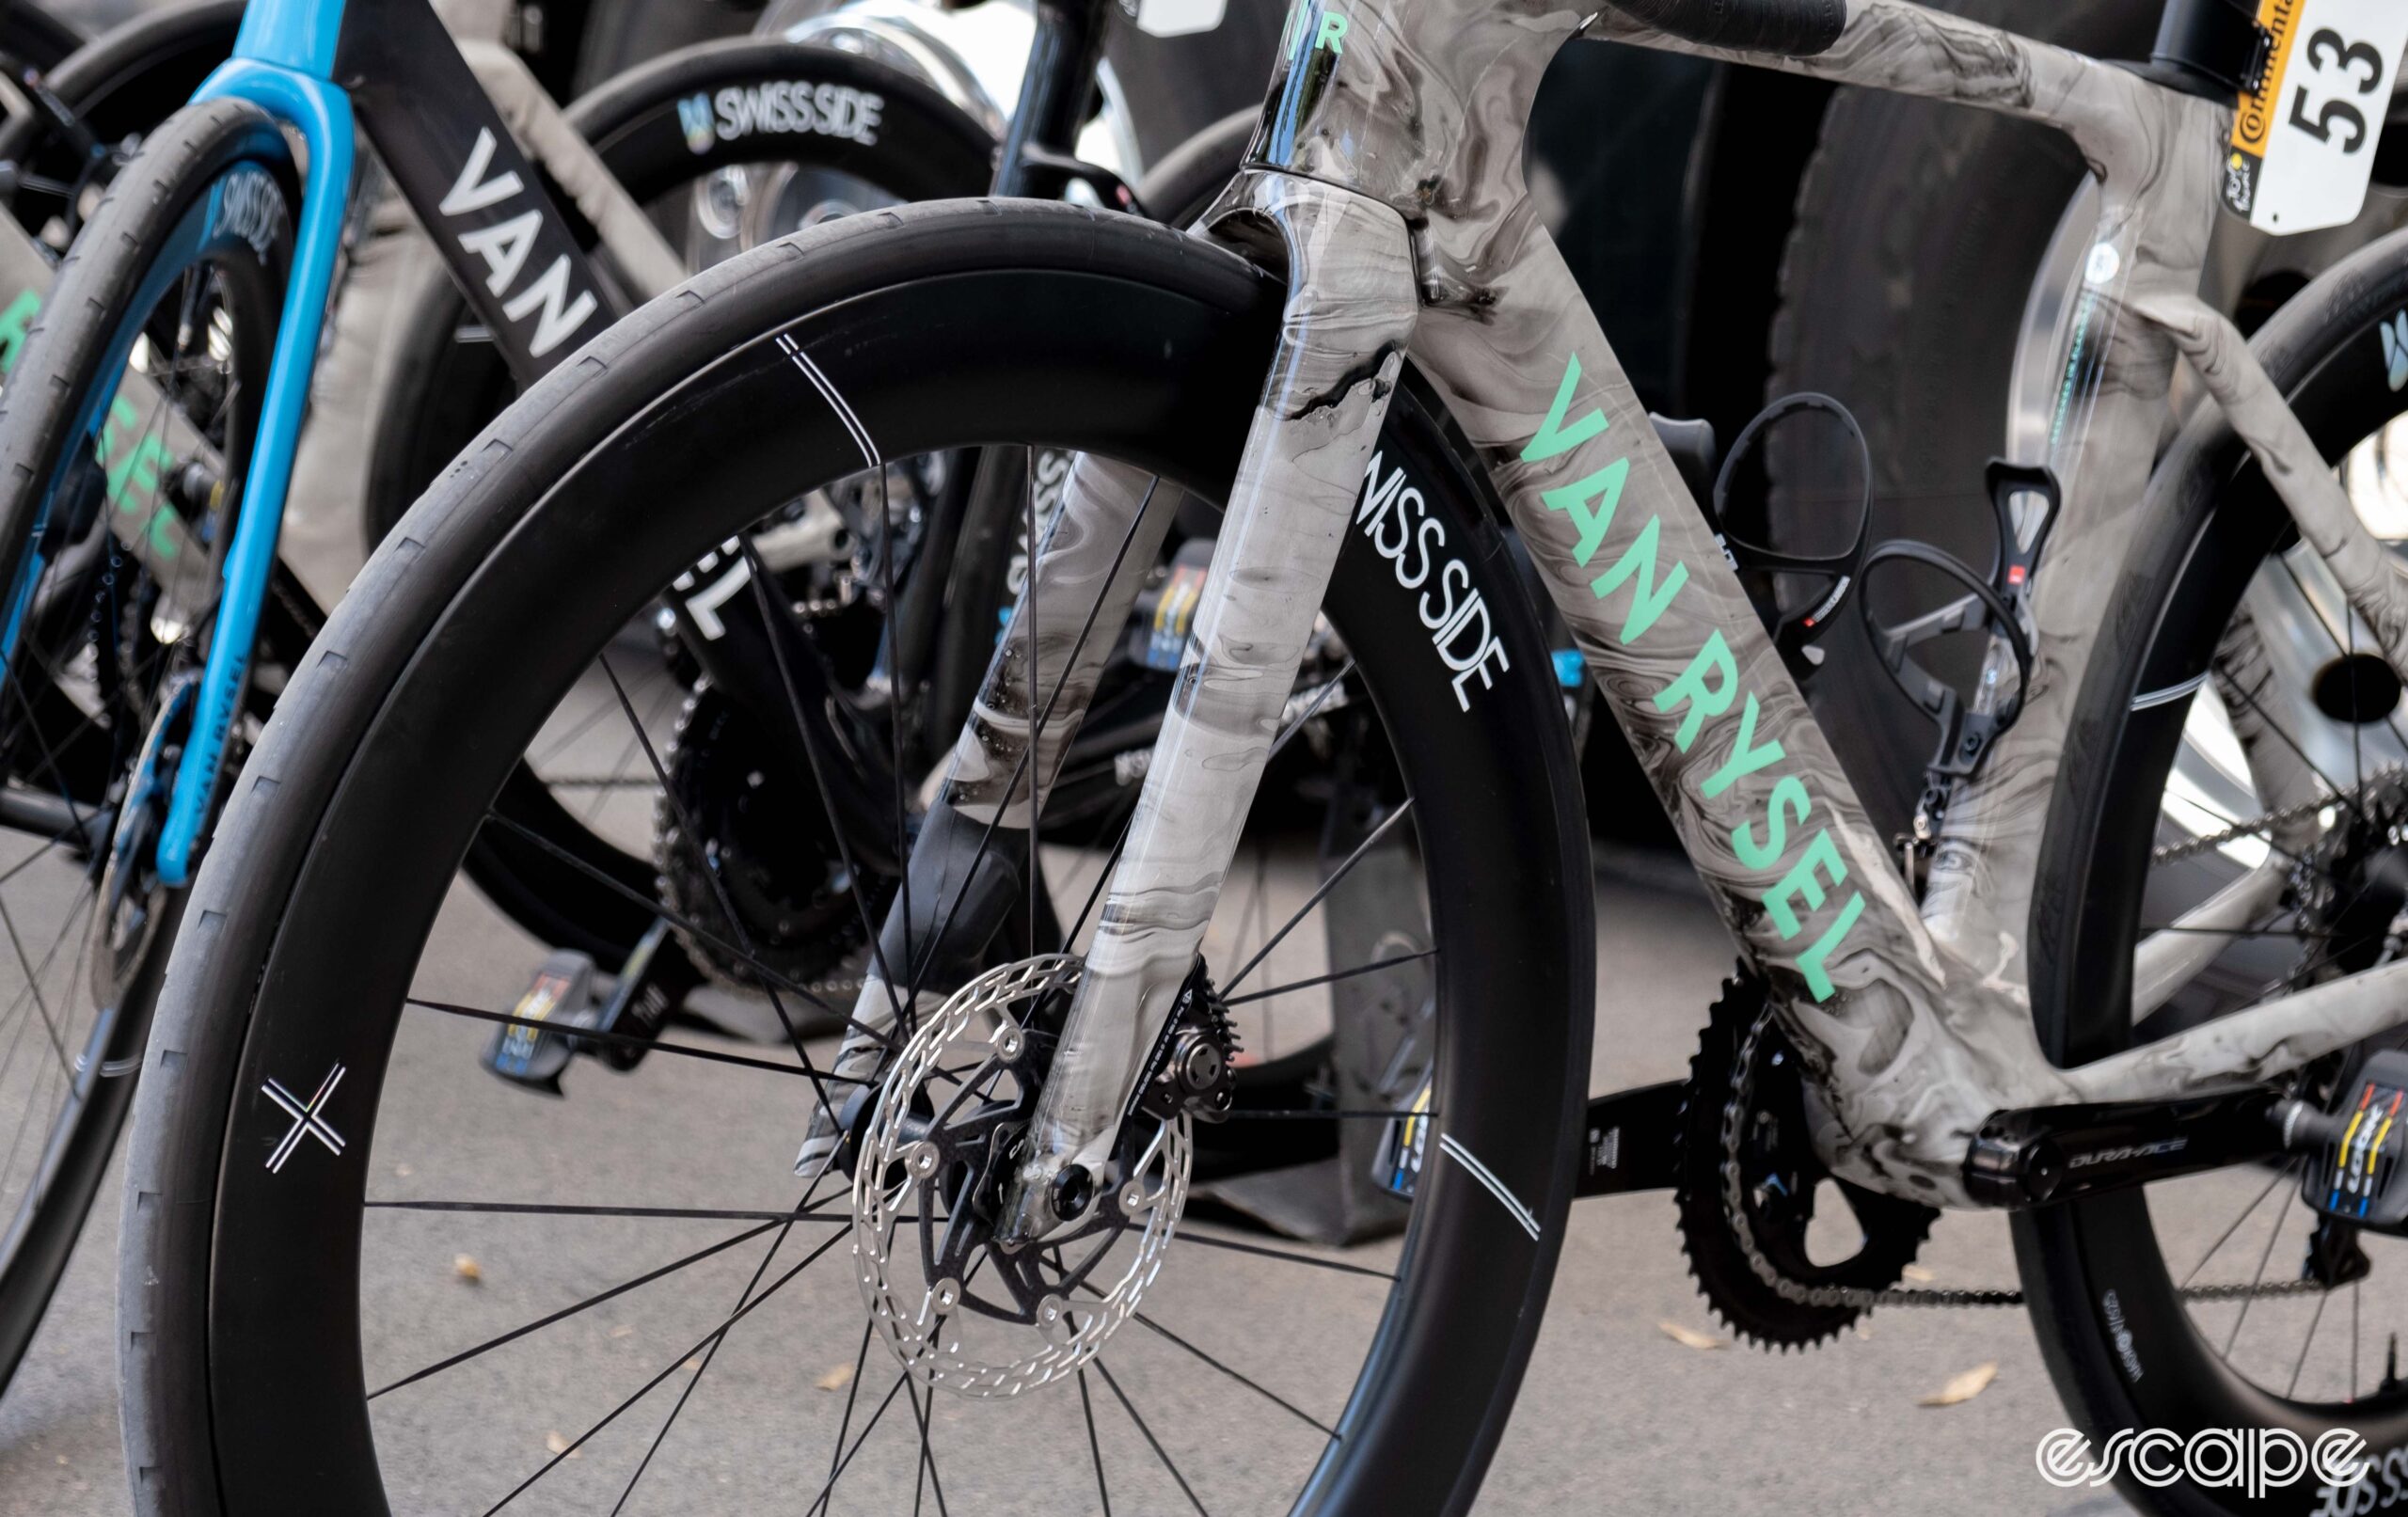 The photo shows Van Rysel's new FCR Pro aero bike forks